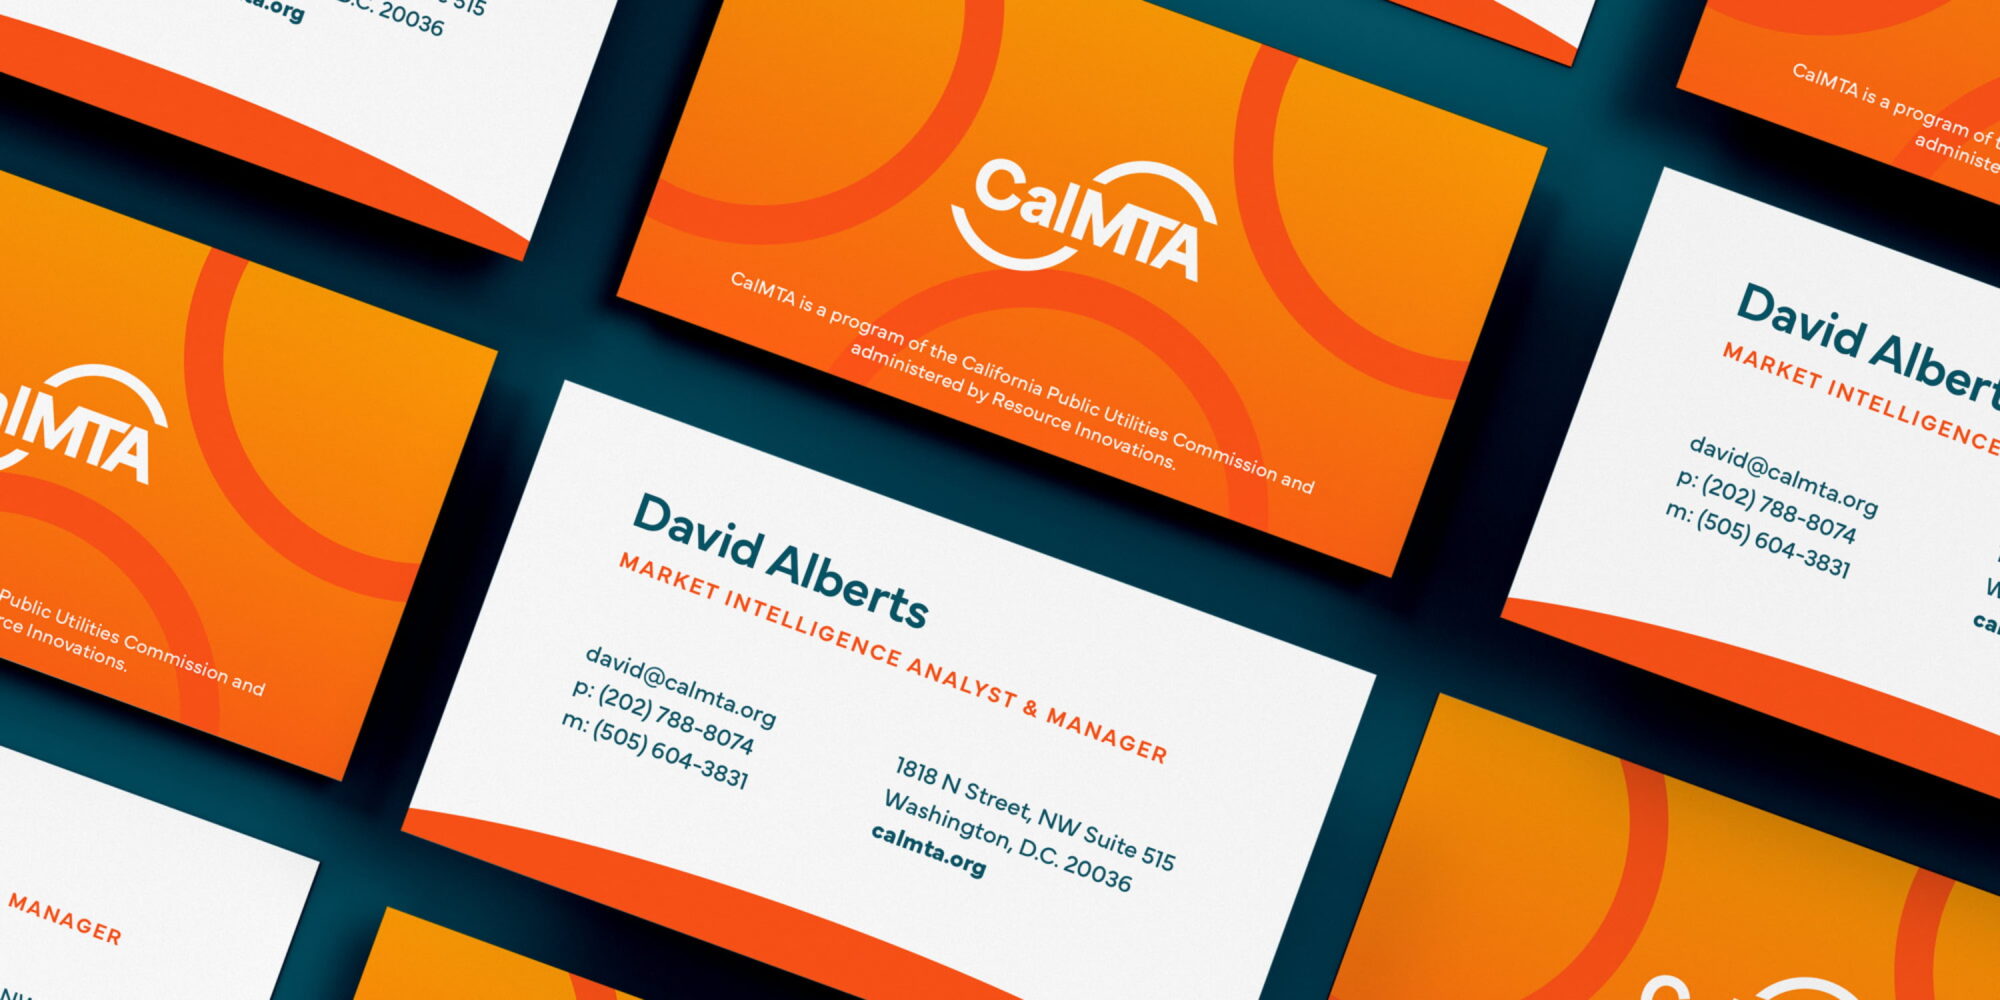 Sample business card mockup using CalMTA brand styling